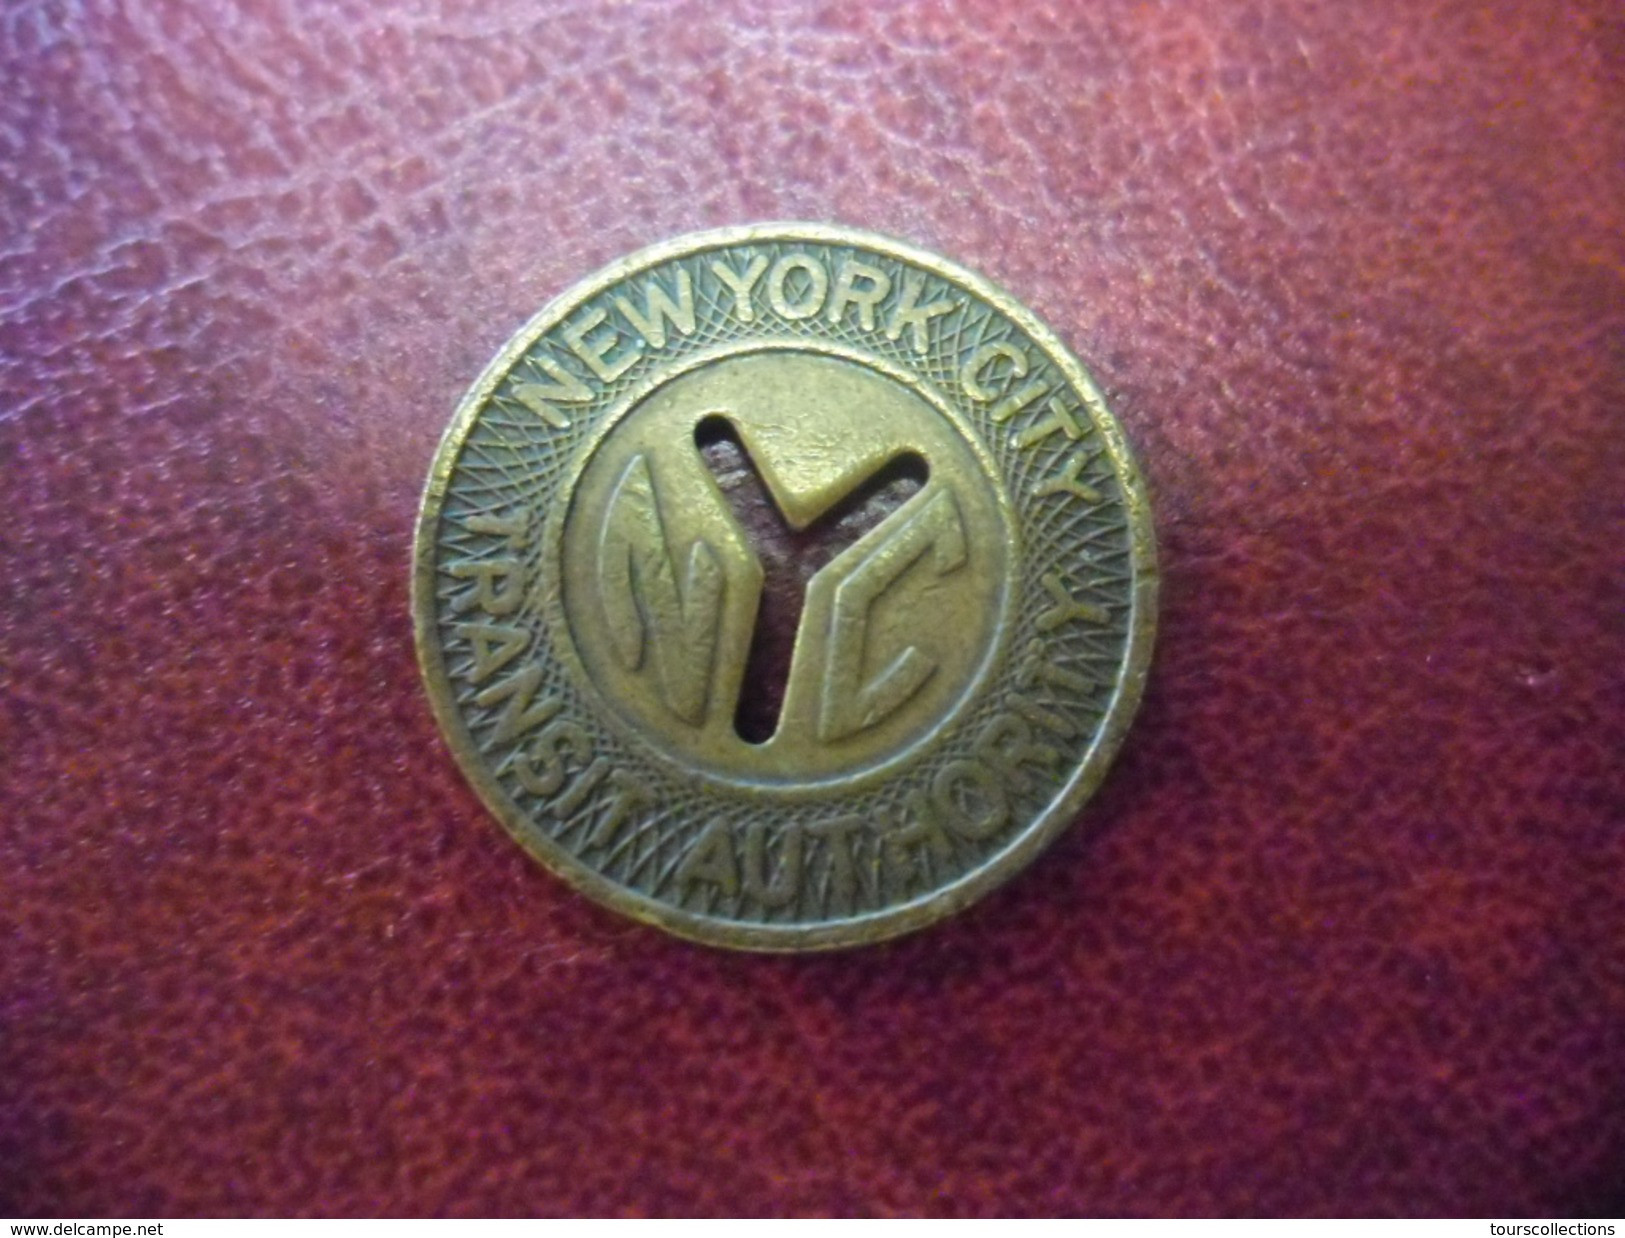 JETON New York City, New York Transit Authority One Fare Transit Token - Subway Métro Vers 1953 à 1970 - Notgeld